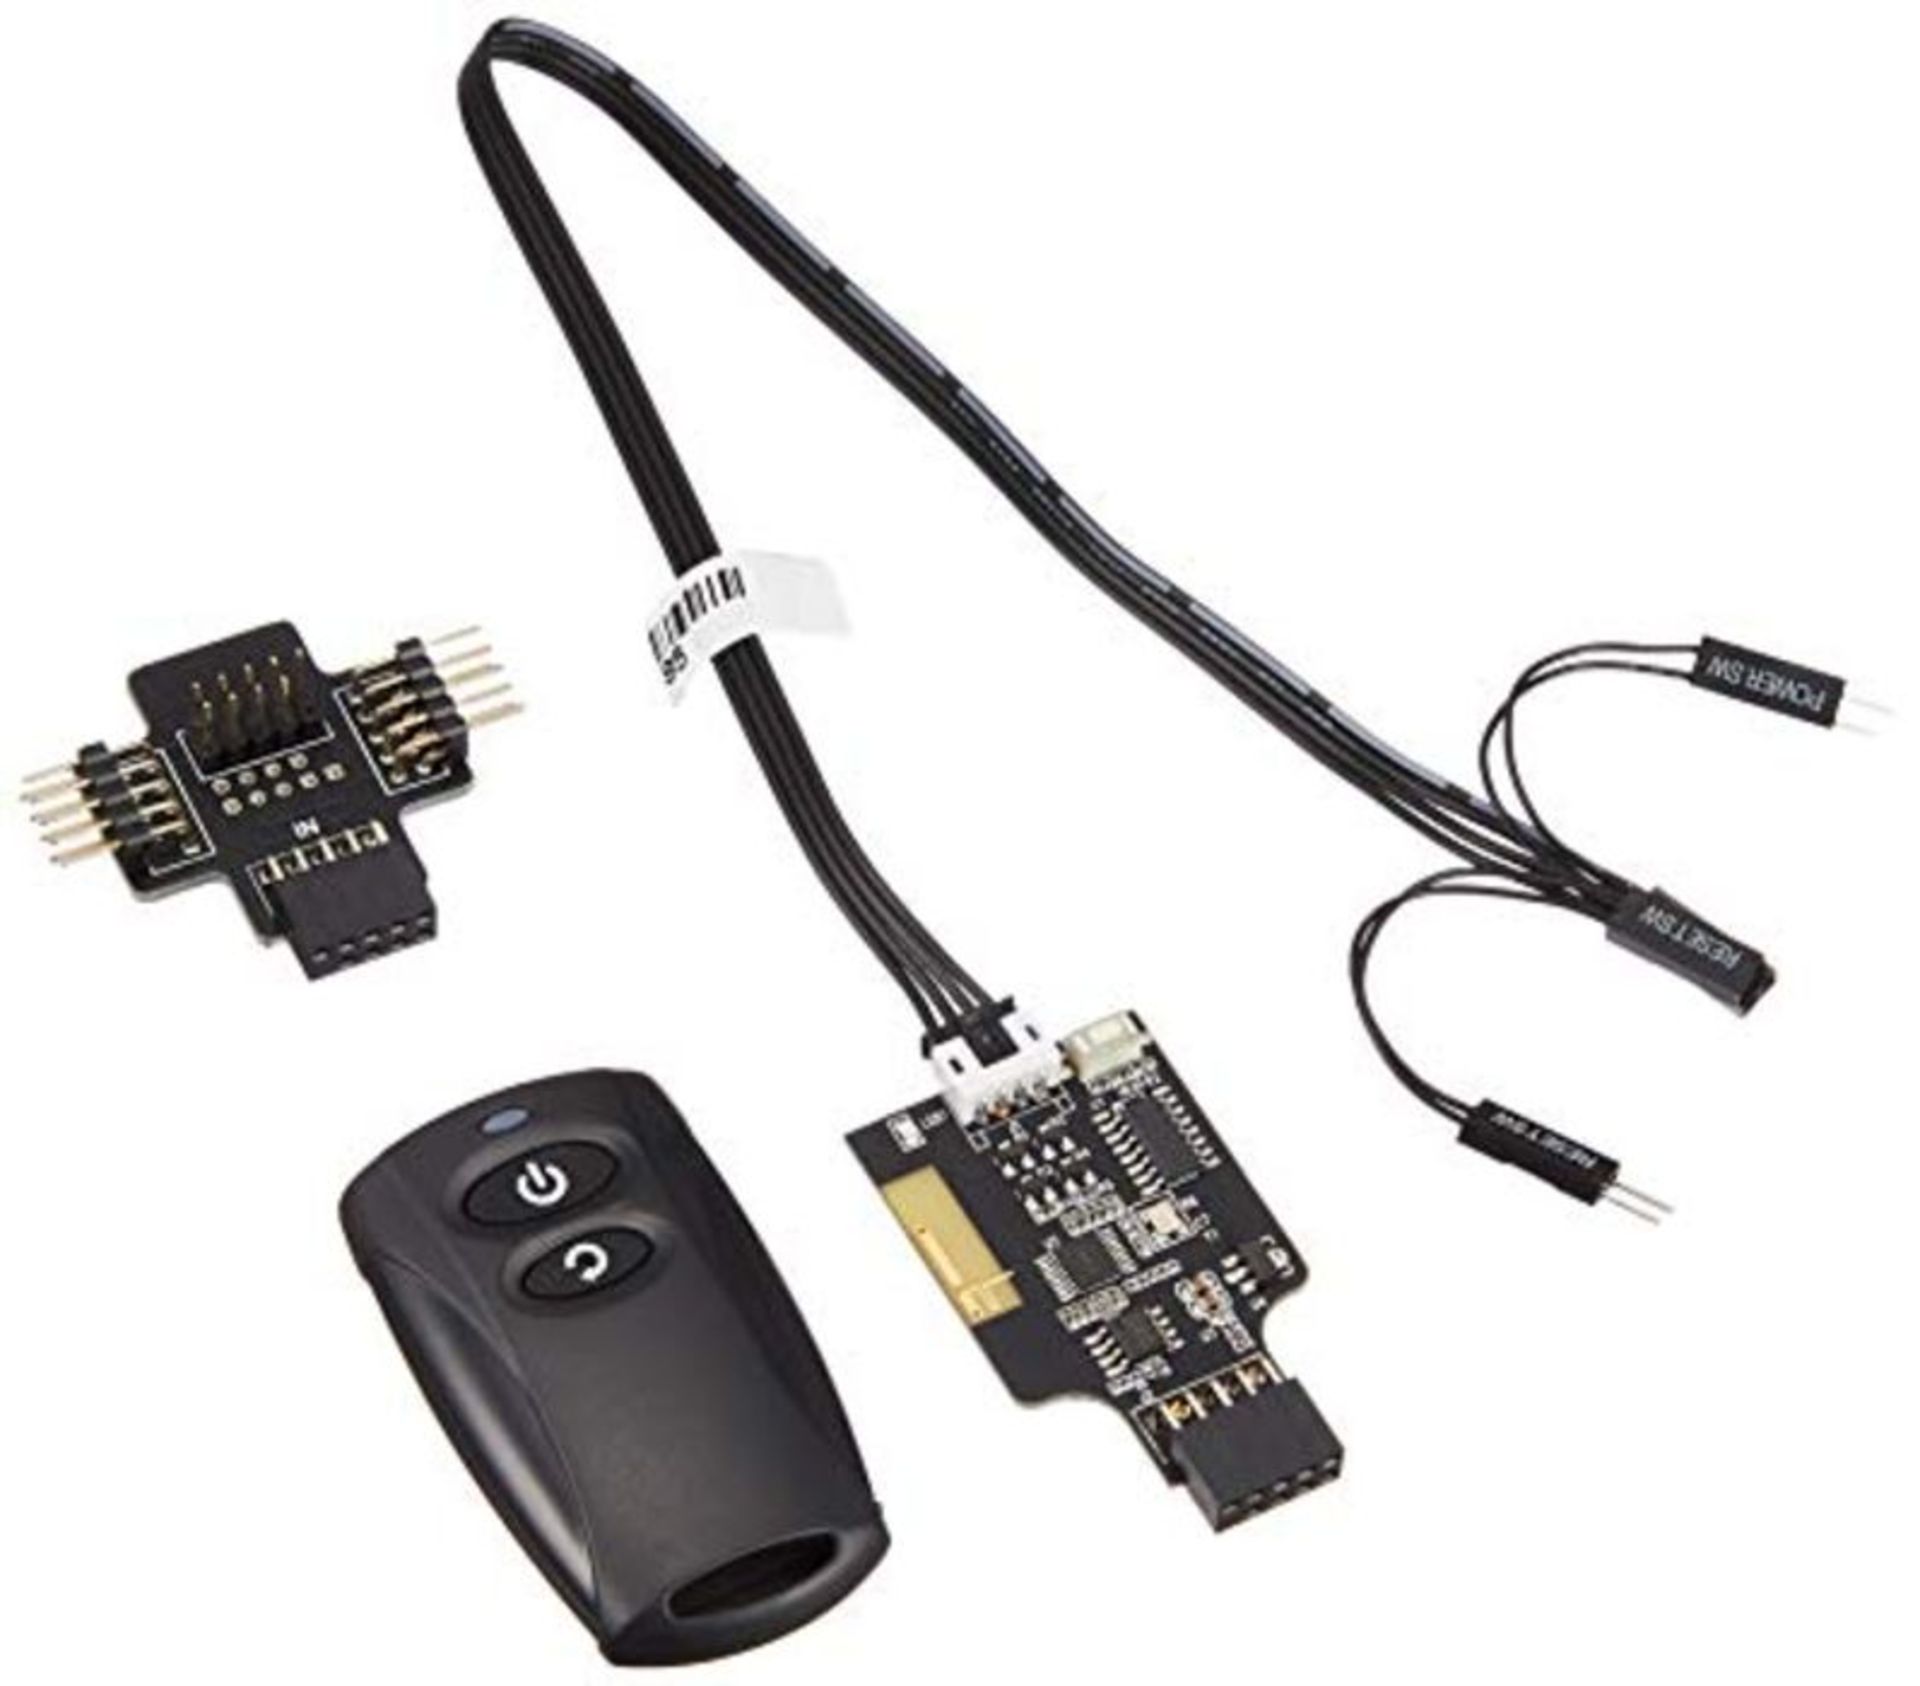 SilverStone SST-ES02-USB - 2.4G Funk-Fernbedienung für PC Power / Reset, USB 2.0 9-Pi